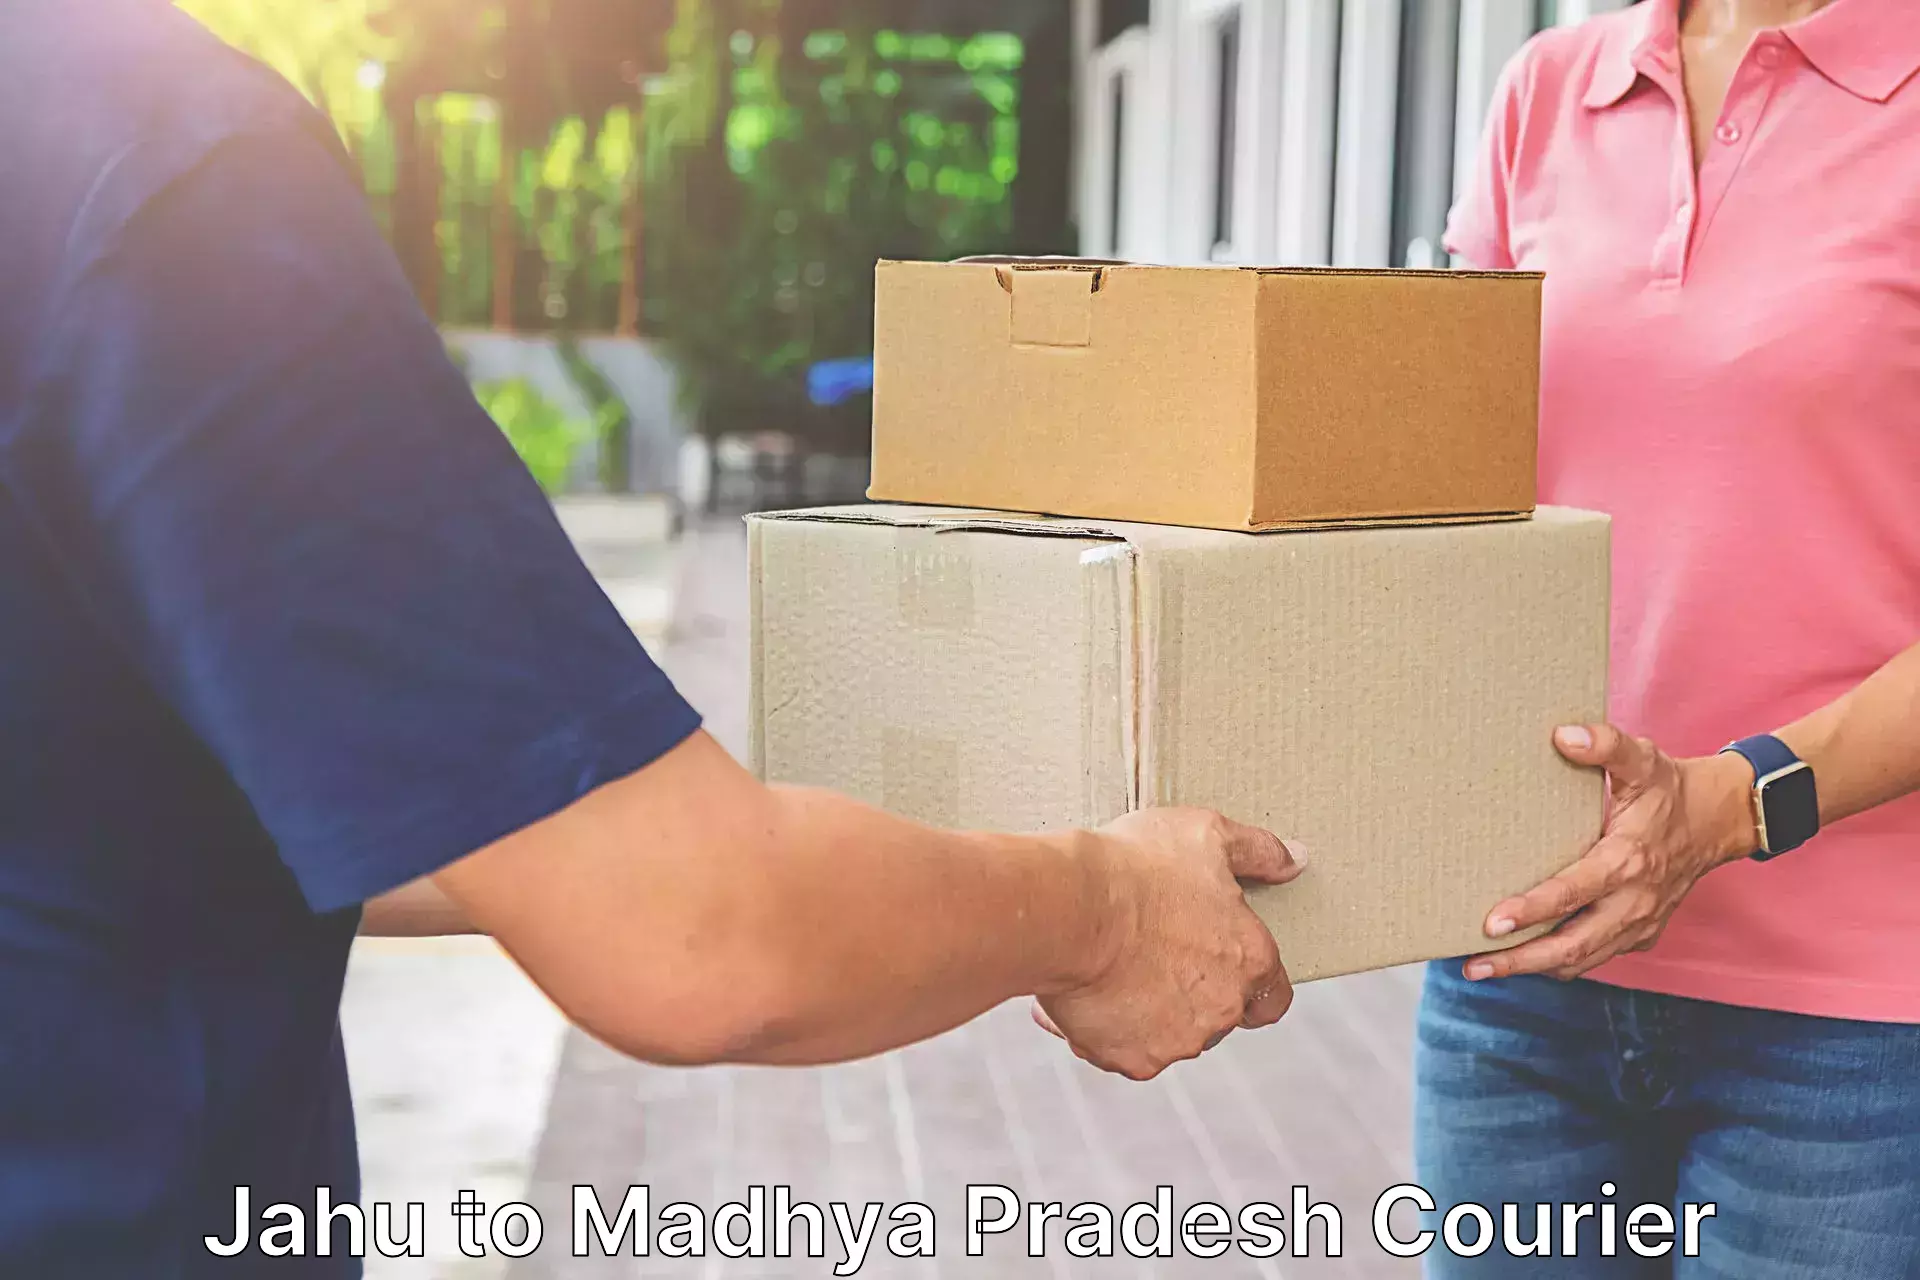 Round-the-clock parcel delivery Jahu to Garh Rewa